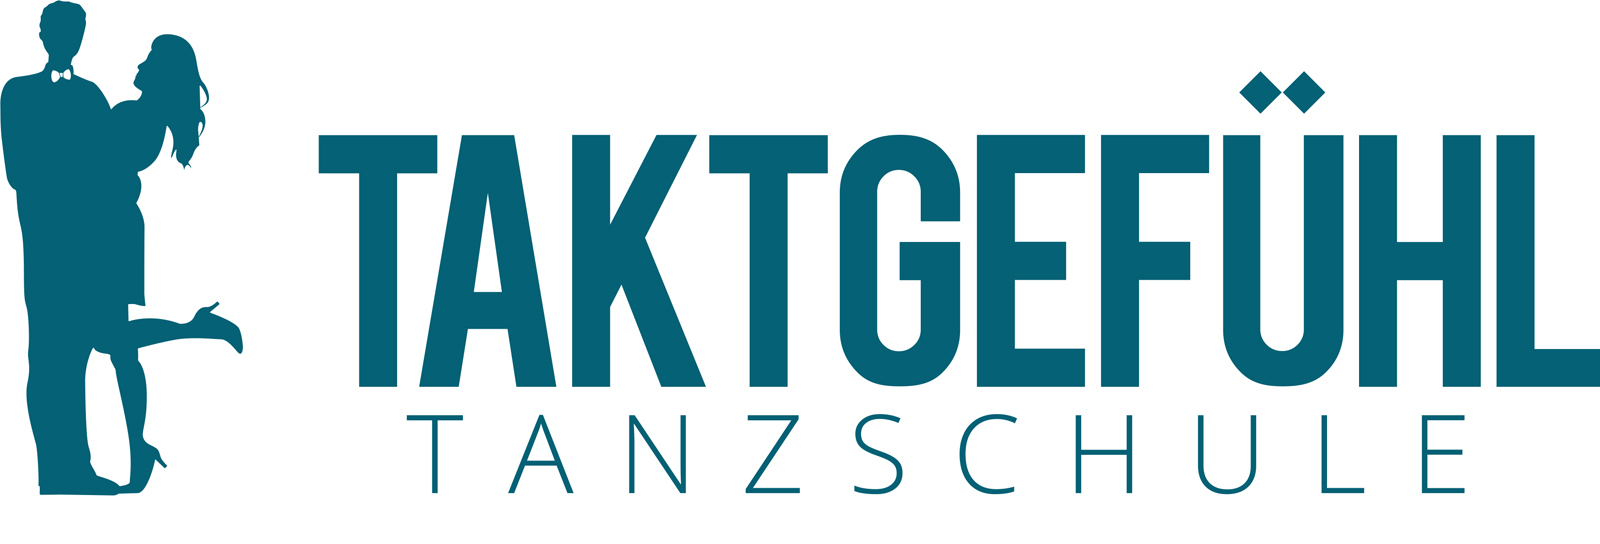 Tanzschule Taktgefühl GmbH